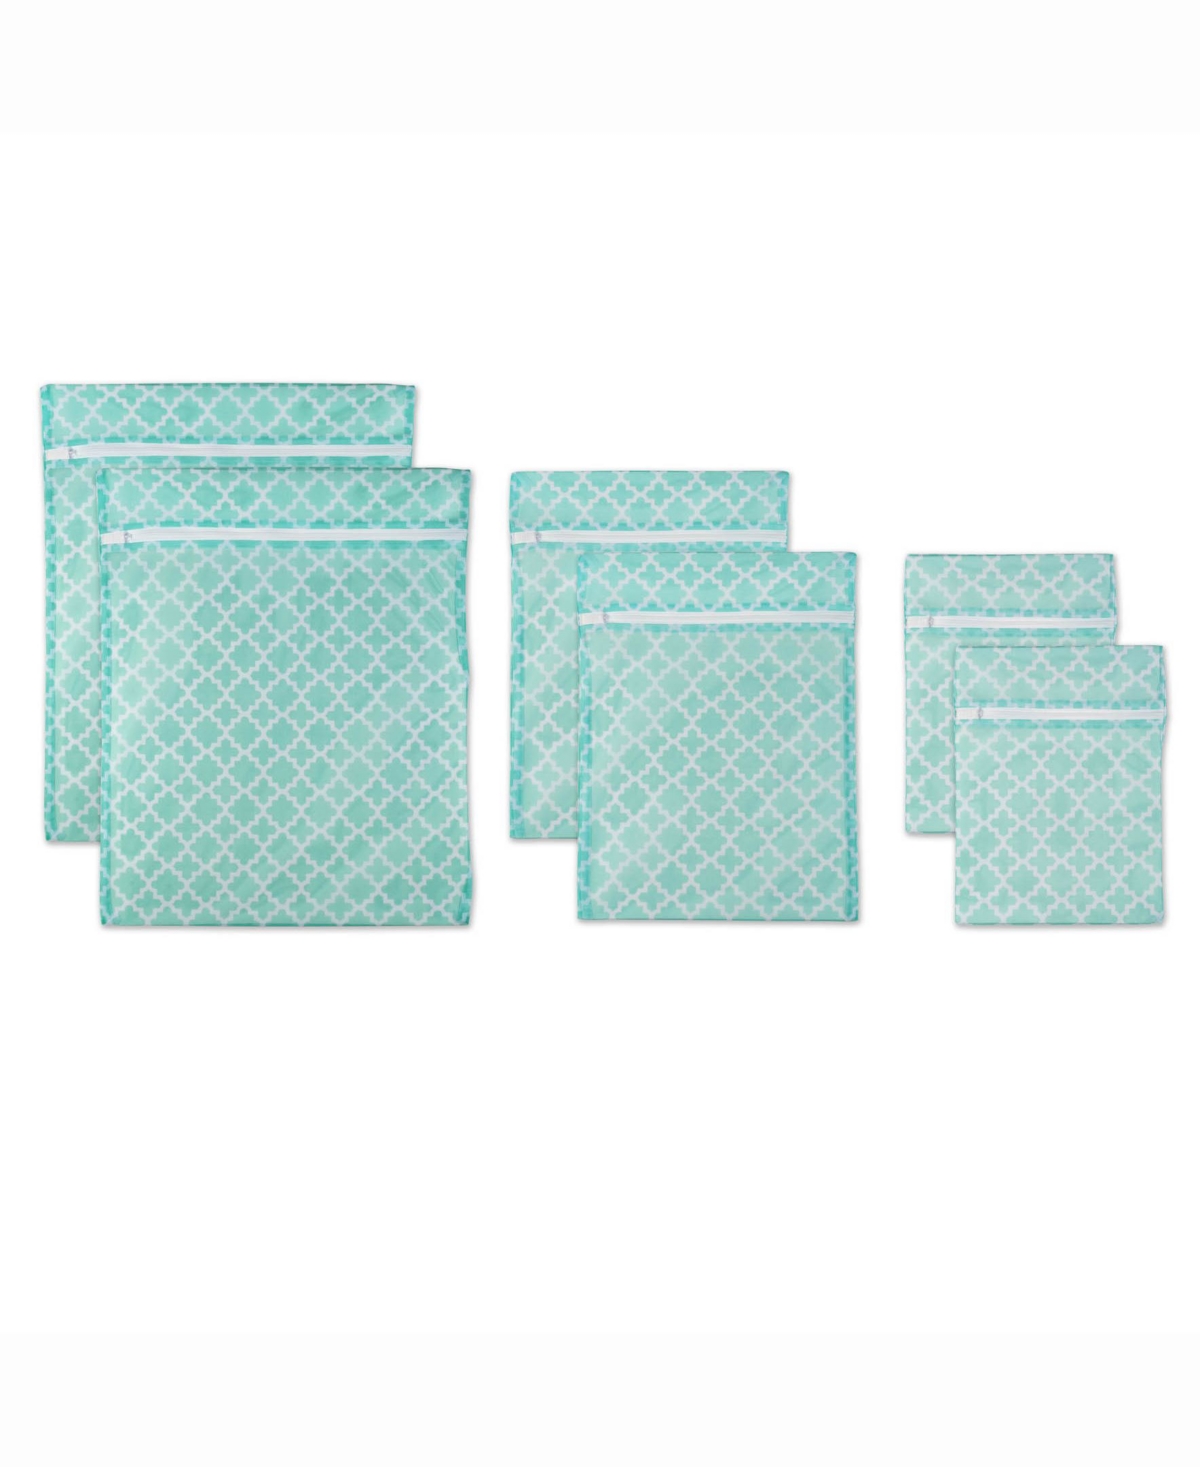 Lattice Set D Mesh Laundry Bag, Set of 6 - Turquoise